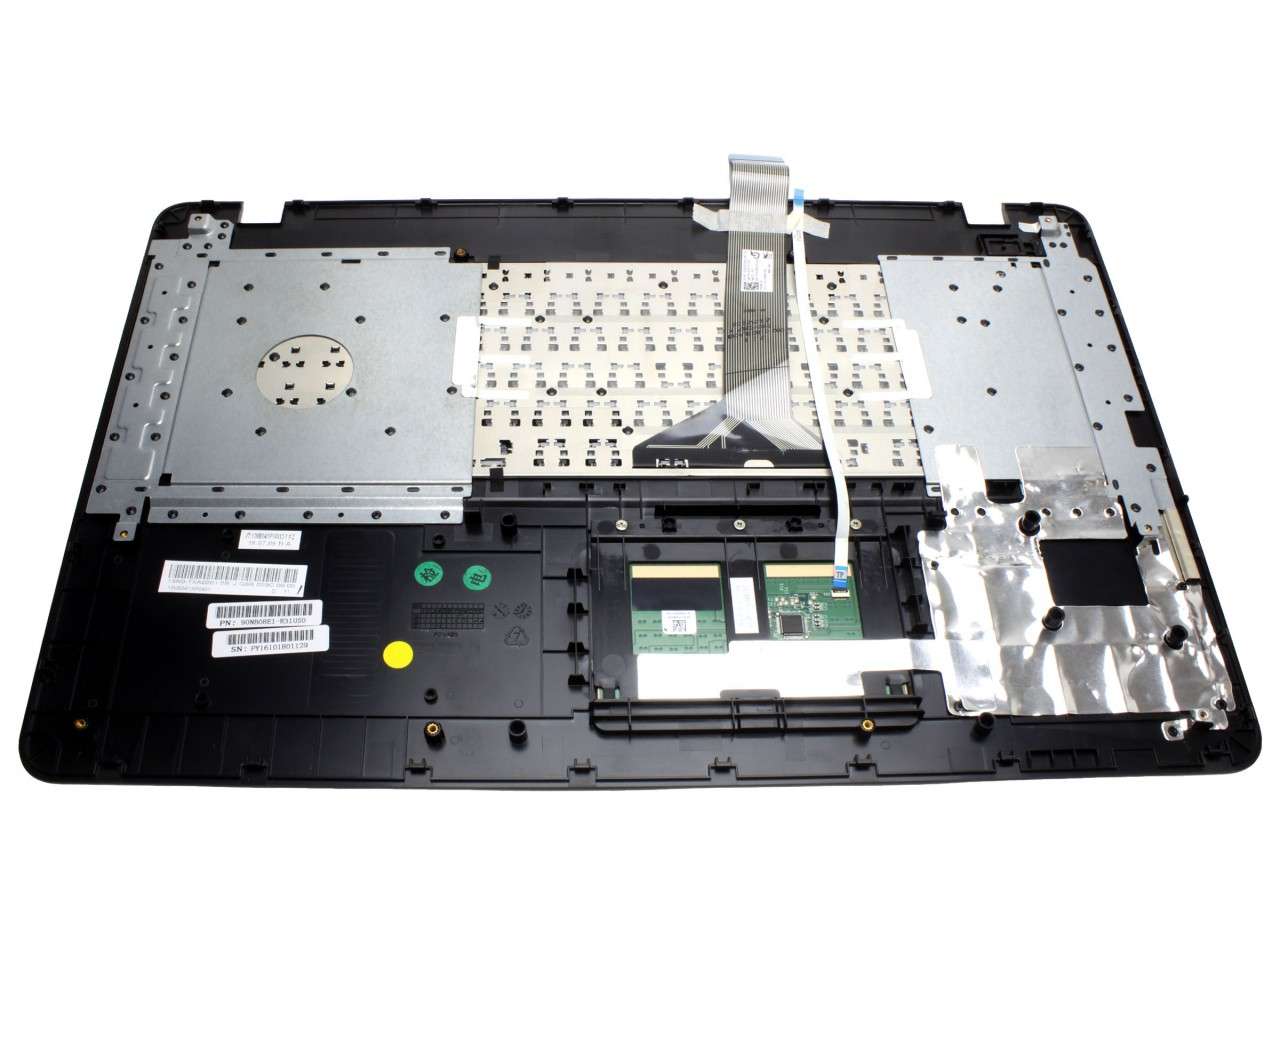 Tastatura Asus A751 neagra cu Palmrest negru